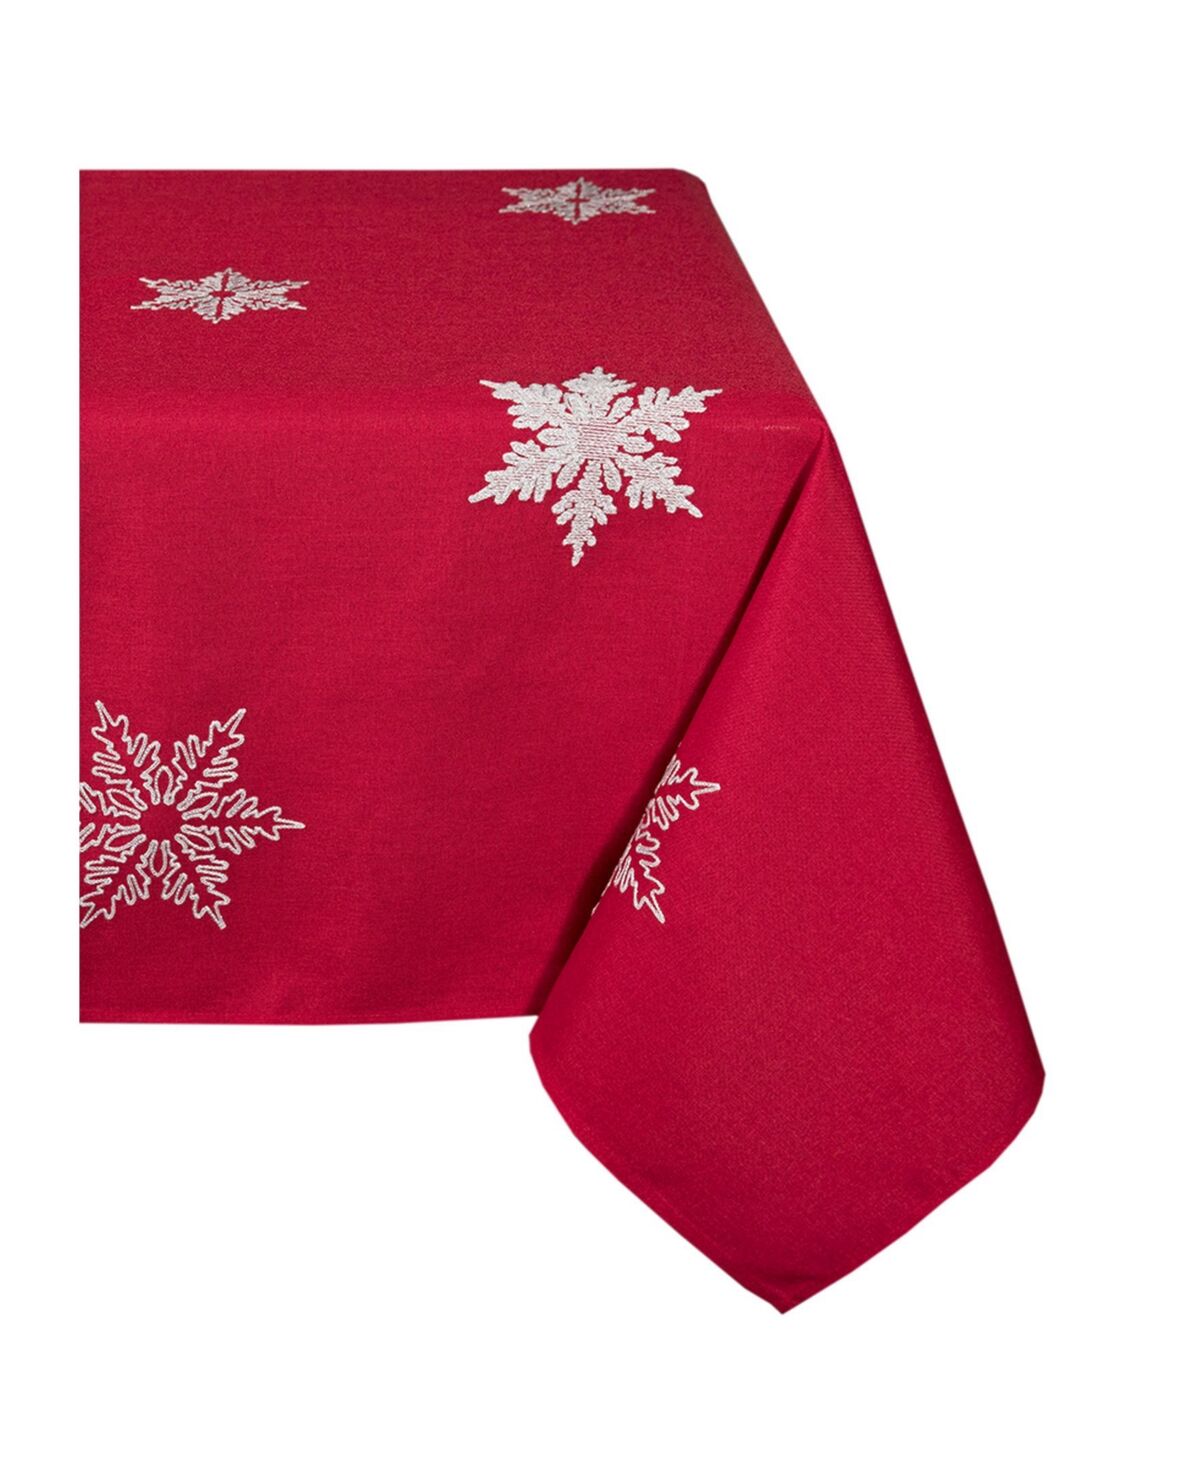 Xia Home Fashions Glisten Snowflake Embroidered Christmas Tablecloth, 70